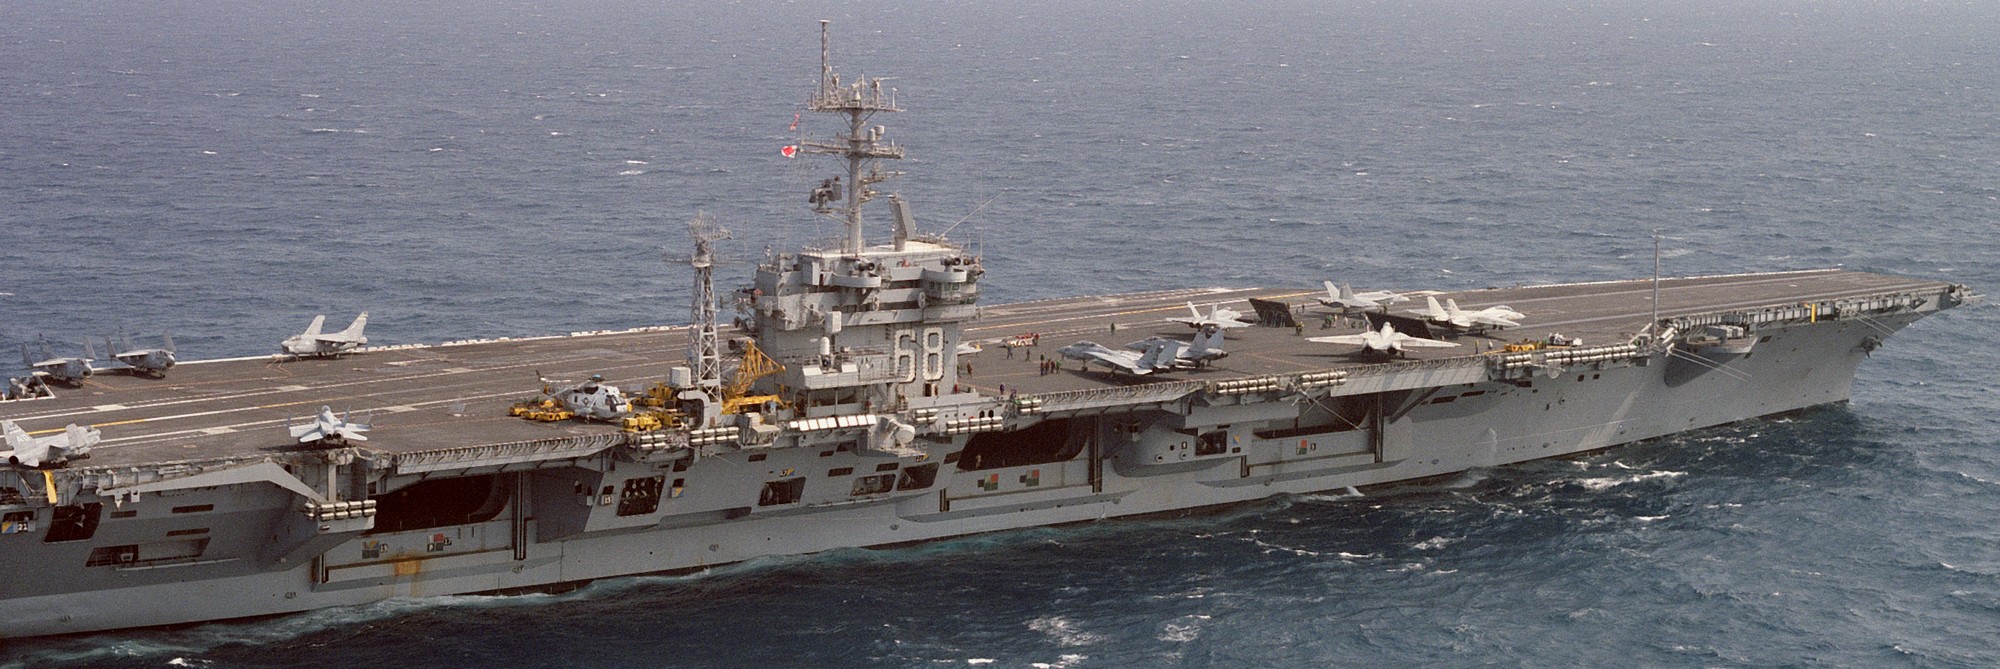 cvn-68 uss nimitz aircraft carrier us navy frs squadron 42